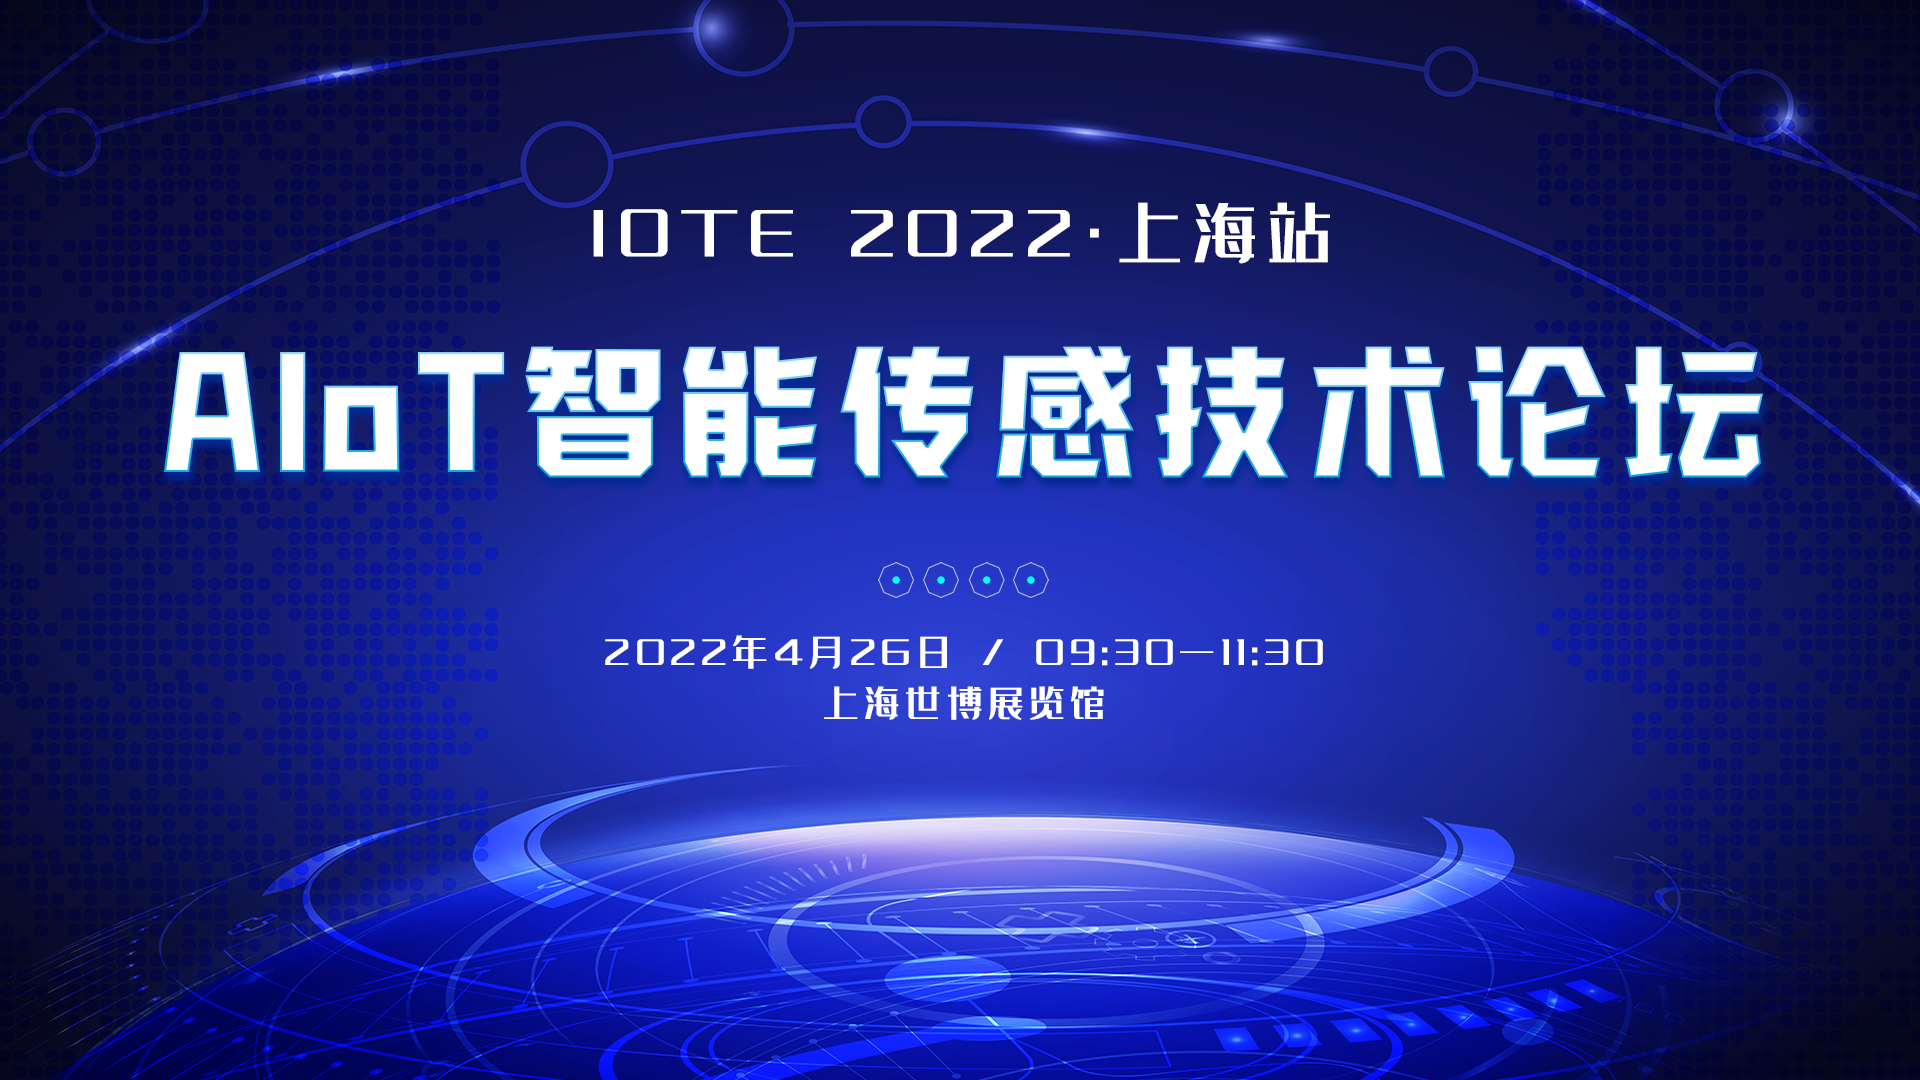 IOTE2022.上海站AIoT智能传感技术论坛